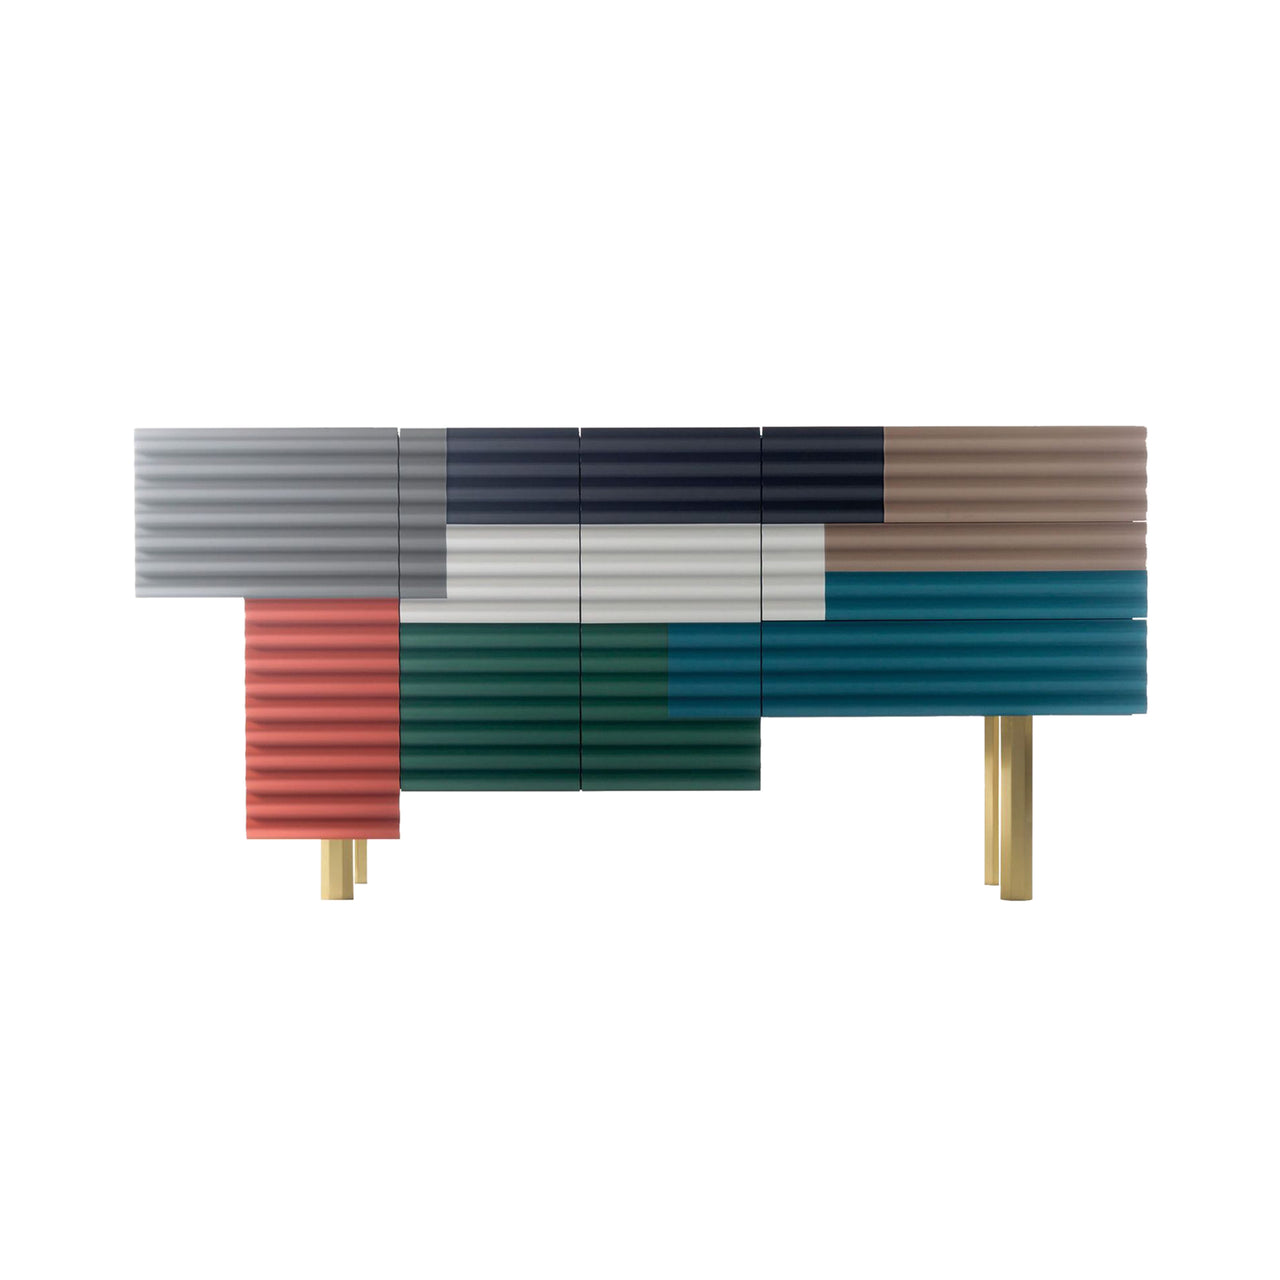 Shanty Cabinet: Model B + Multicolor